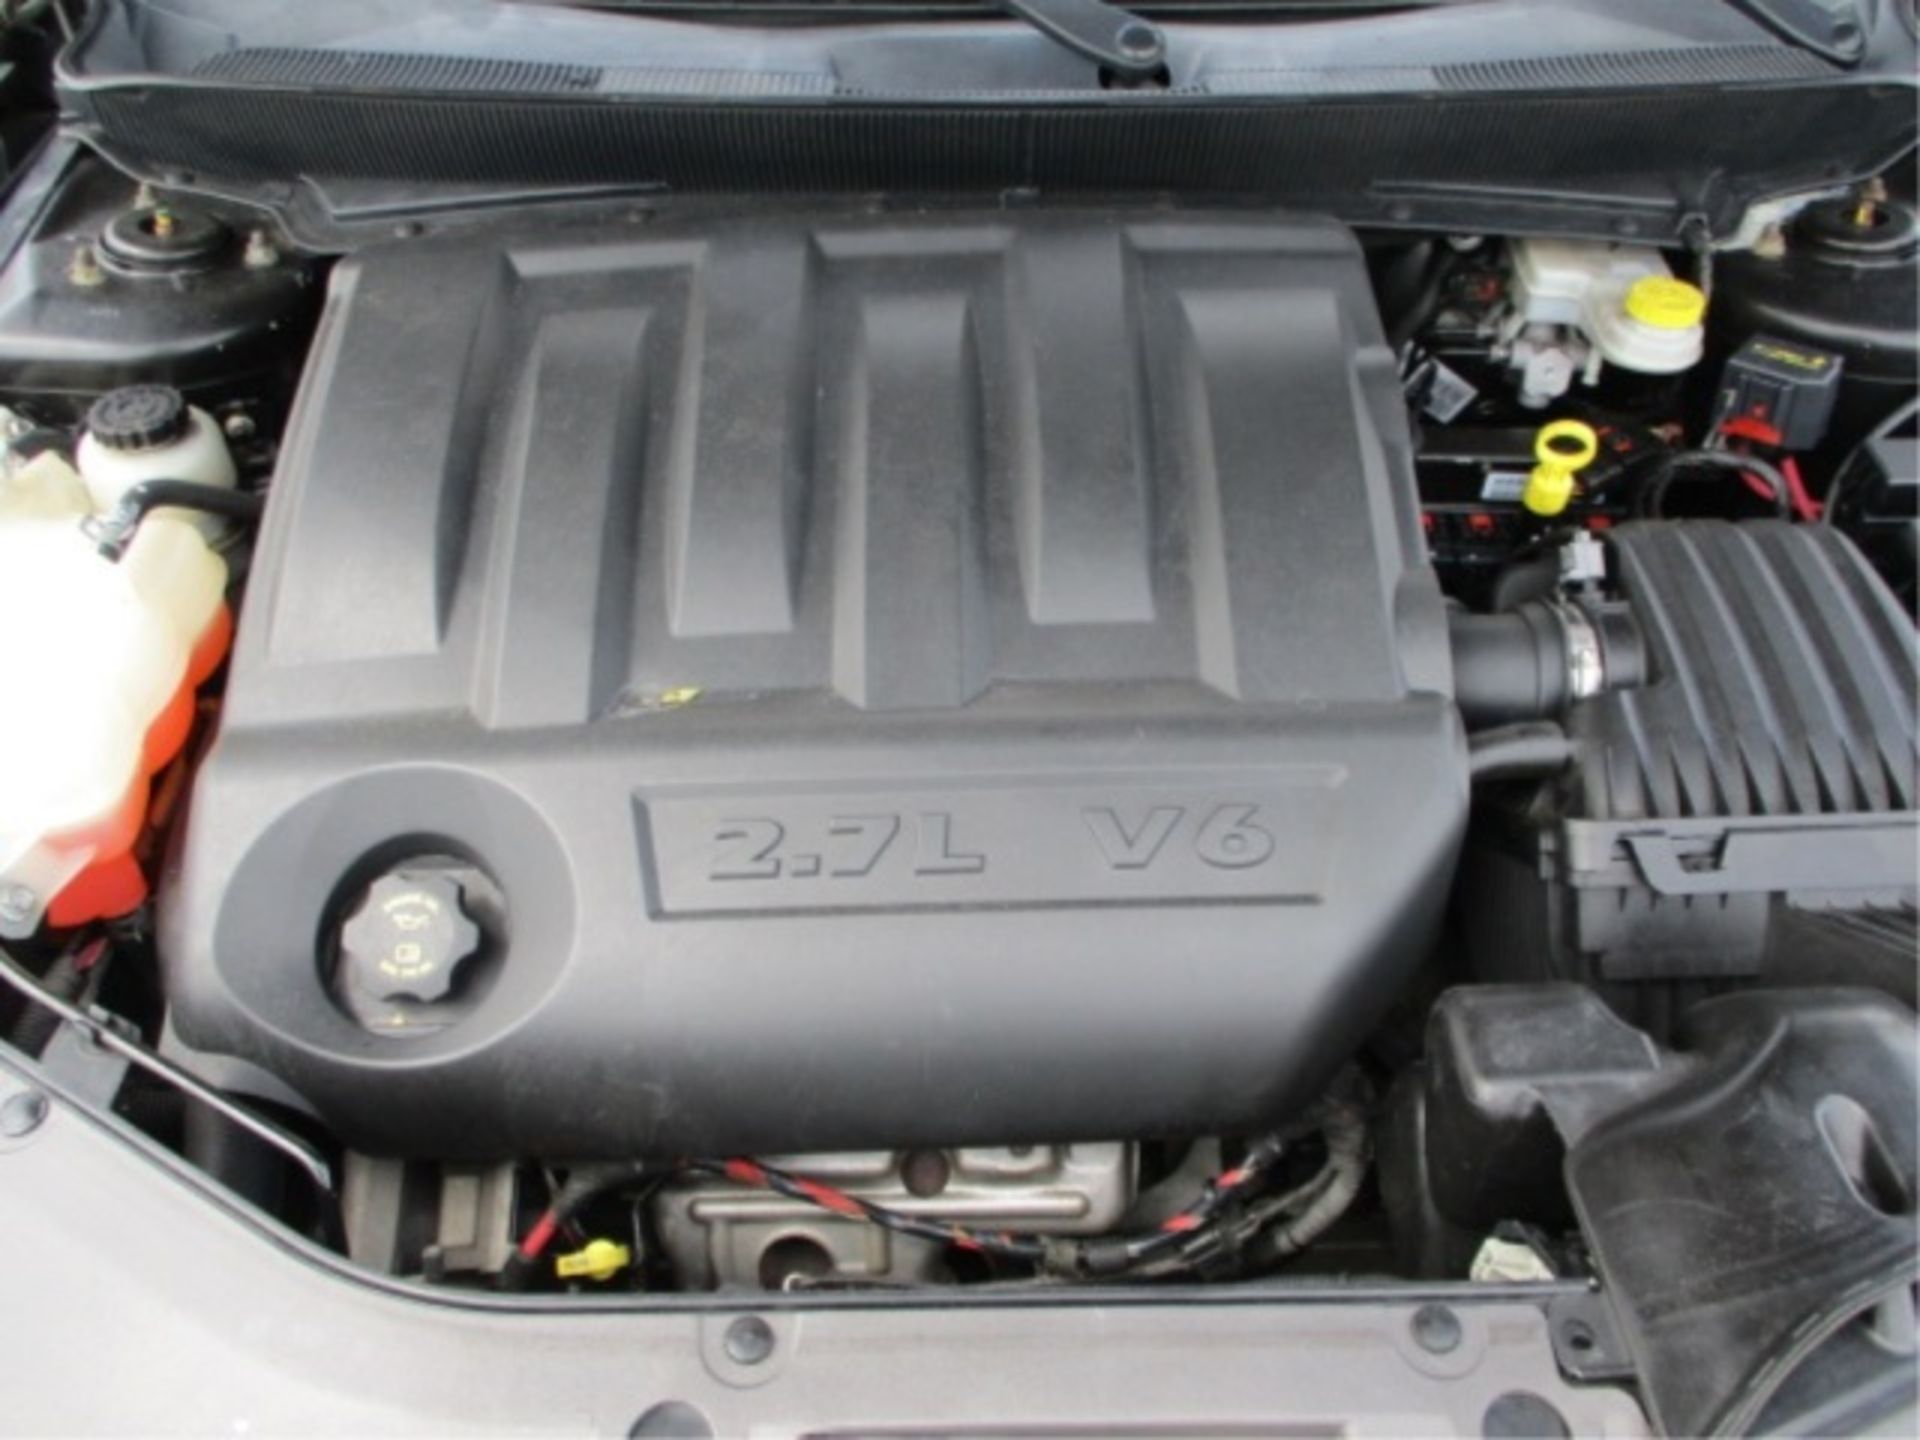 2007 Chrysler Sebring Sedan, 2.7L V6 Gas, Automatic, S/N: 1C3LC56R17N524072, Miles/Hours - 137410 - Image 18 of 22